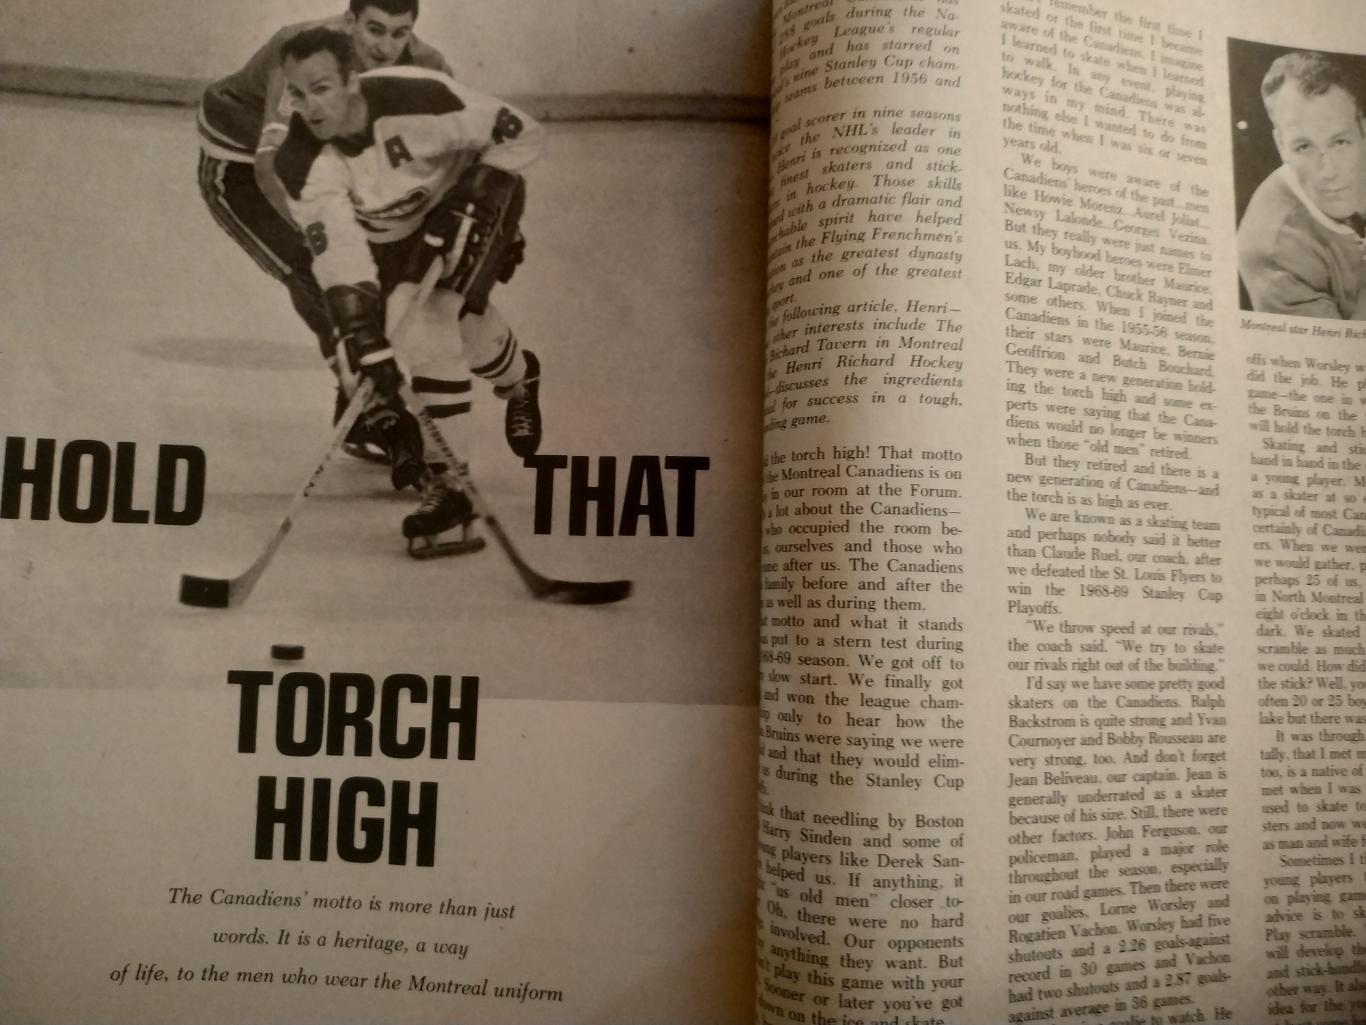 ХОККЕЙ СПРАВОЧНИК ЕЖЕГОДНИК НХЛ NHL WINTER 1970 HOCKEY GUIDE CORD SPORTFACKTS 6